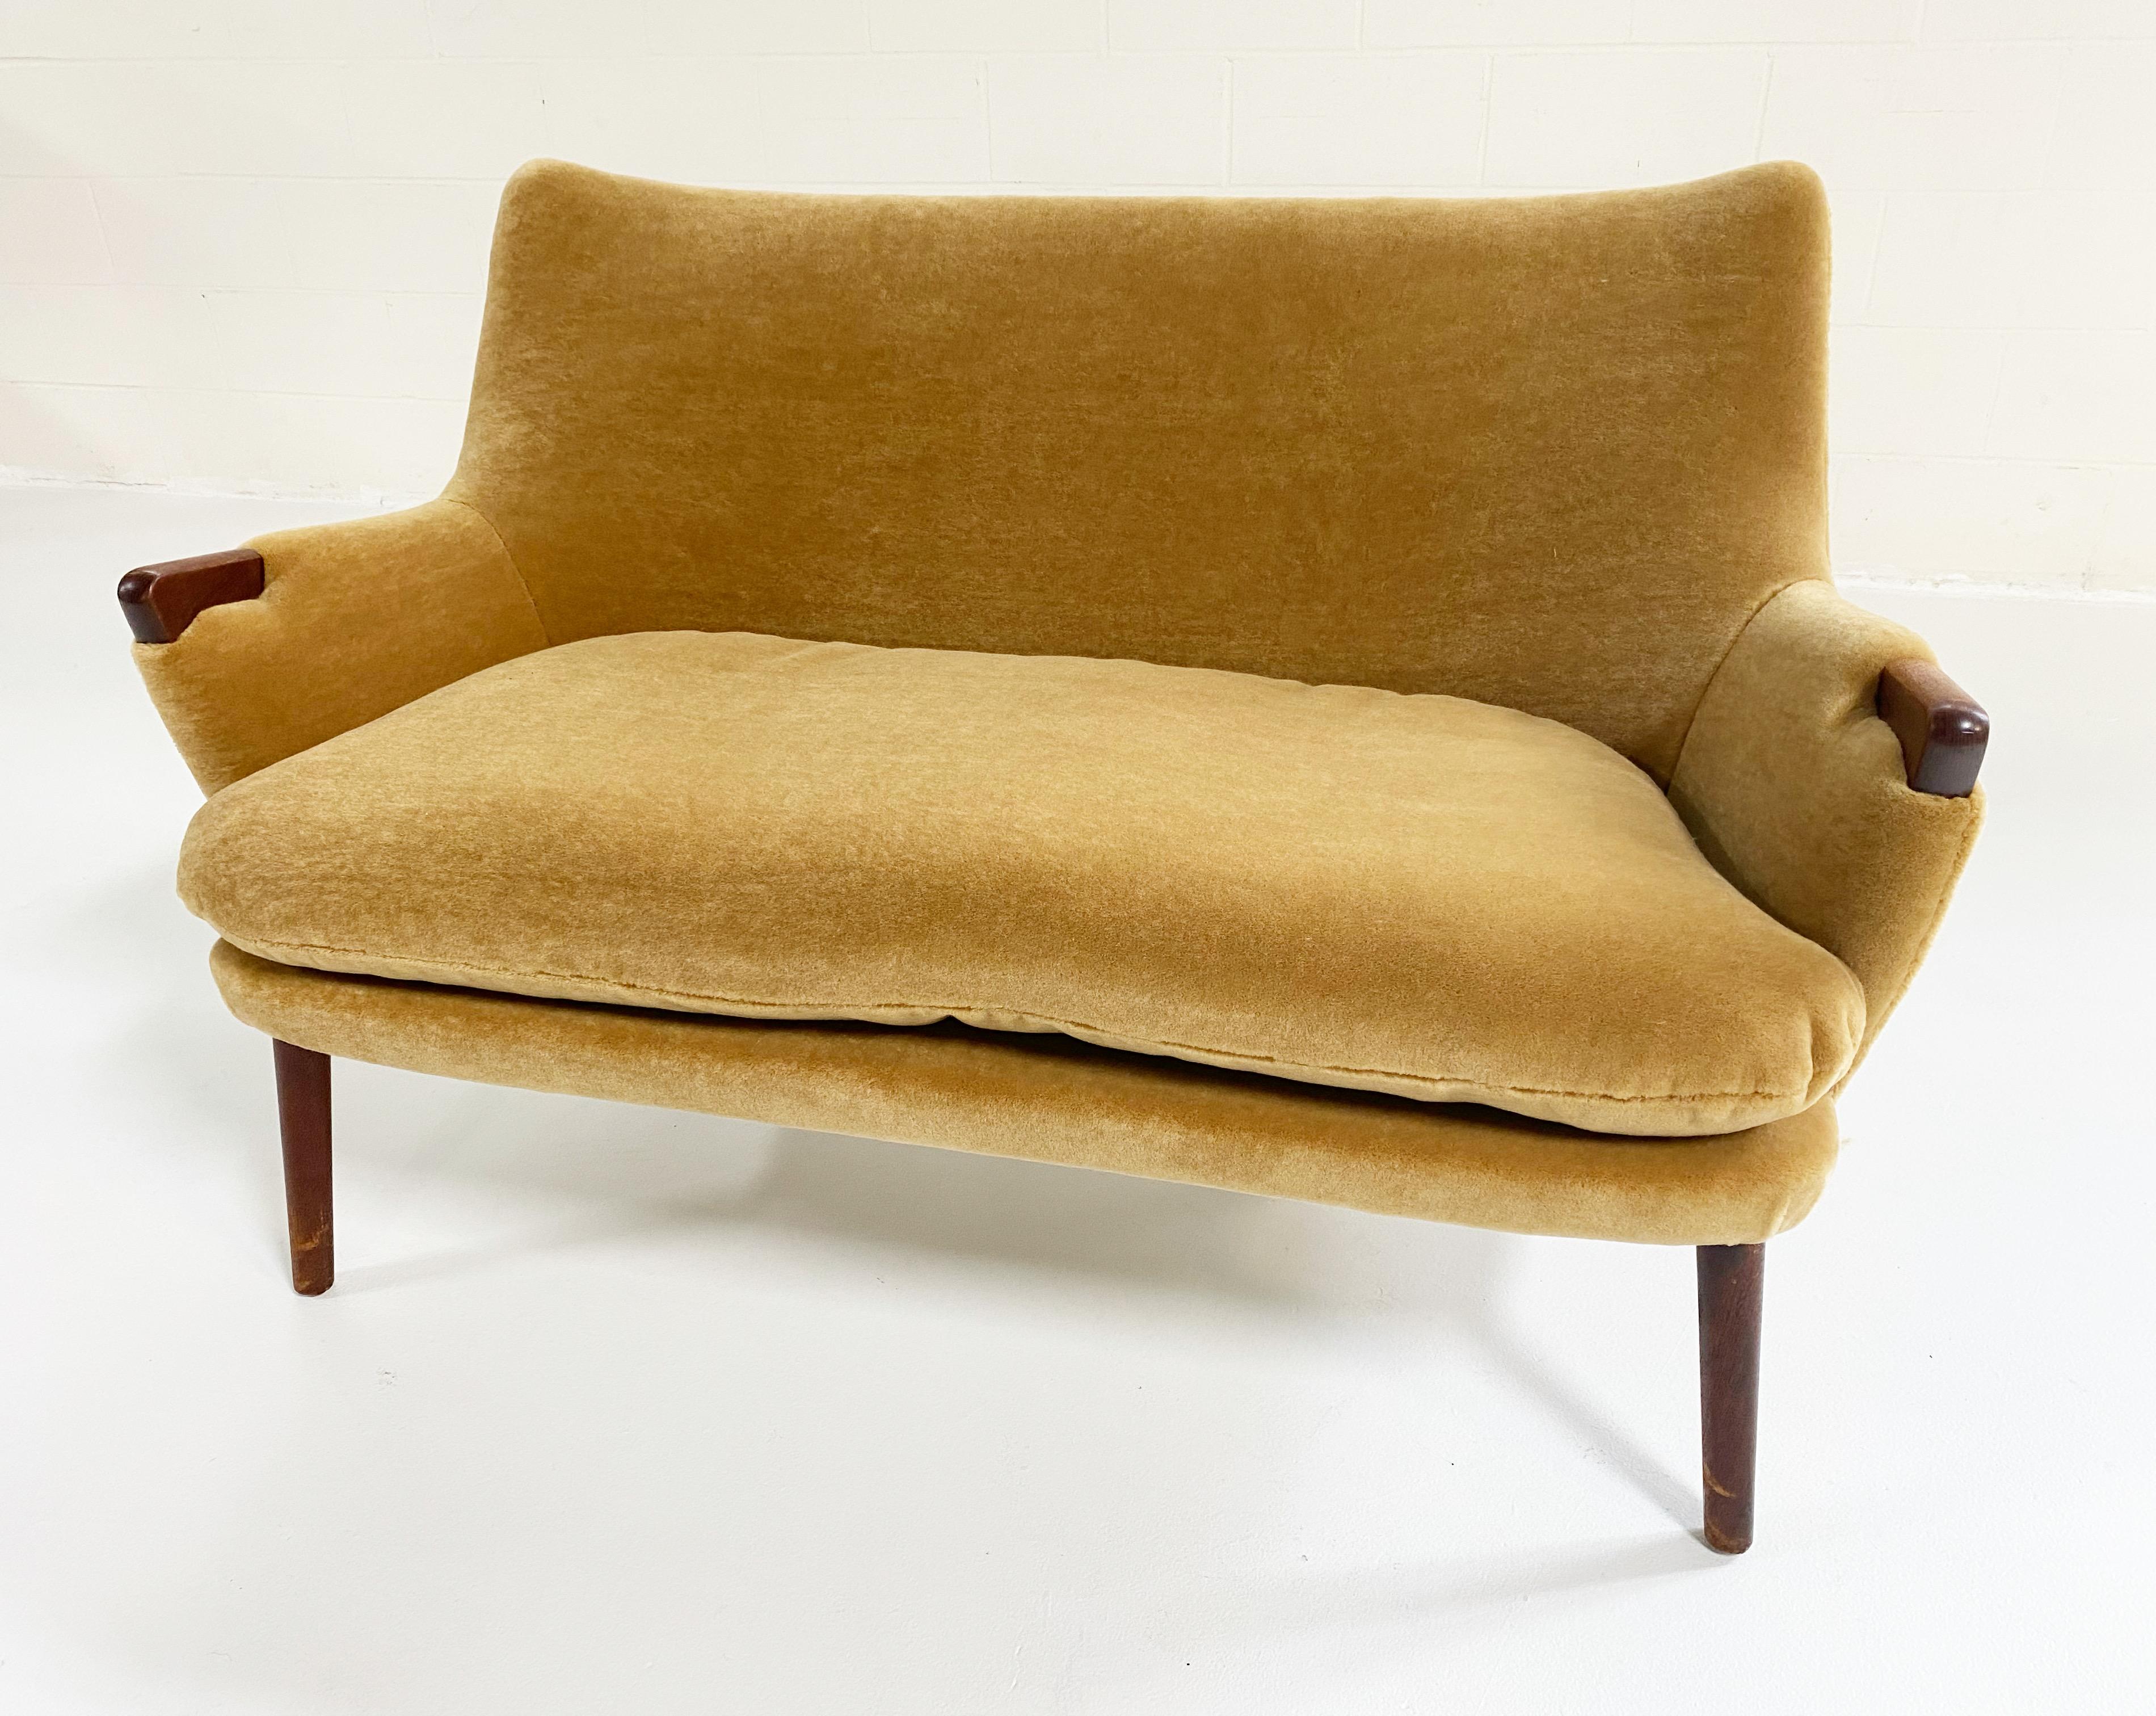 Scandinavian Modern Vintage Hans Wegner Ch72 Sofa, Restored in Pierre Frey Teddy Mohair